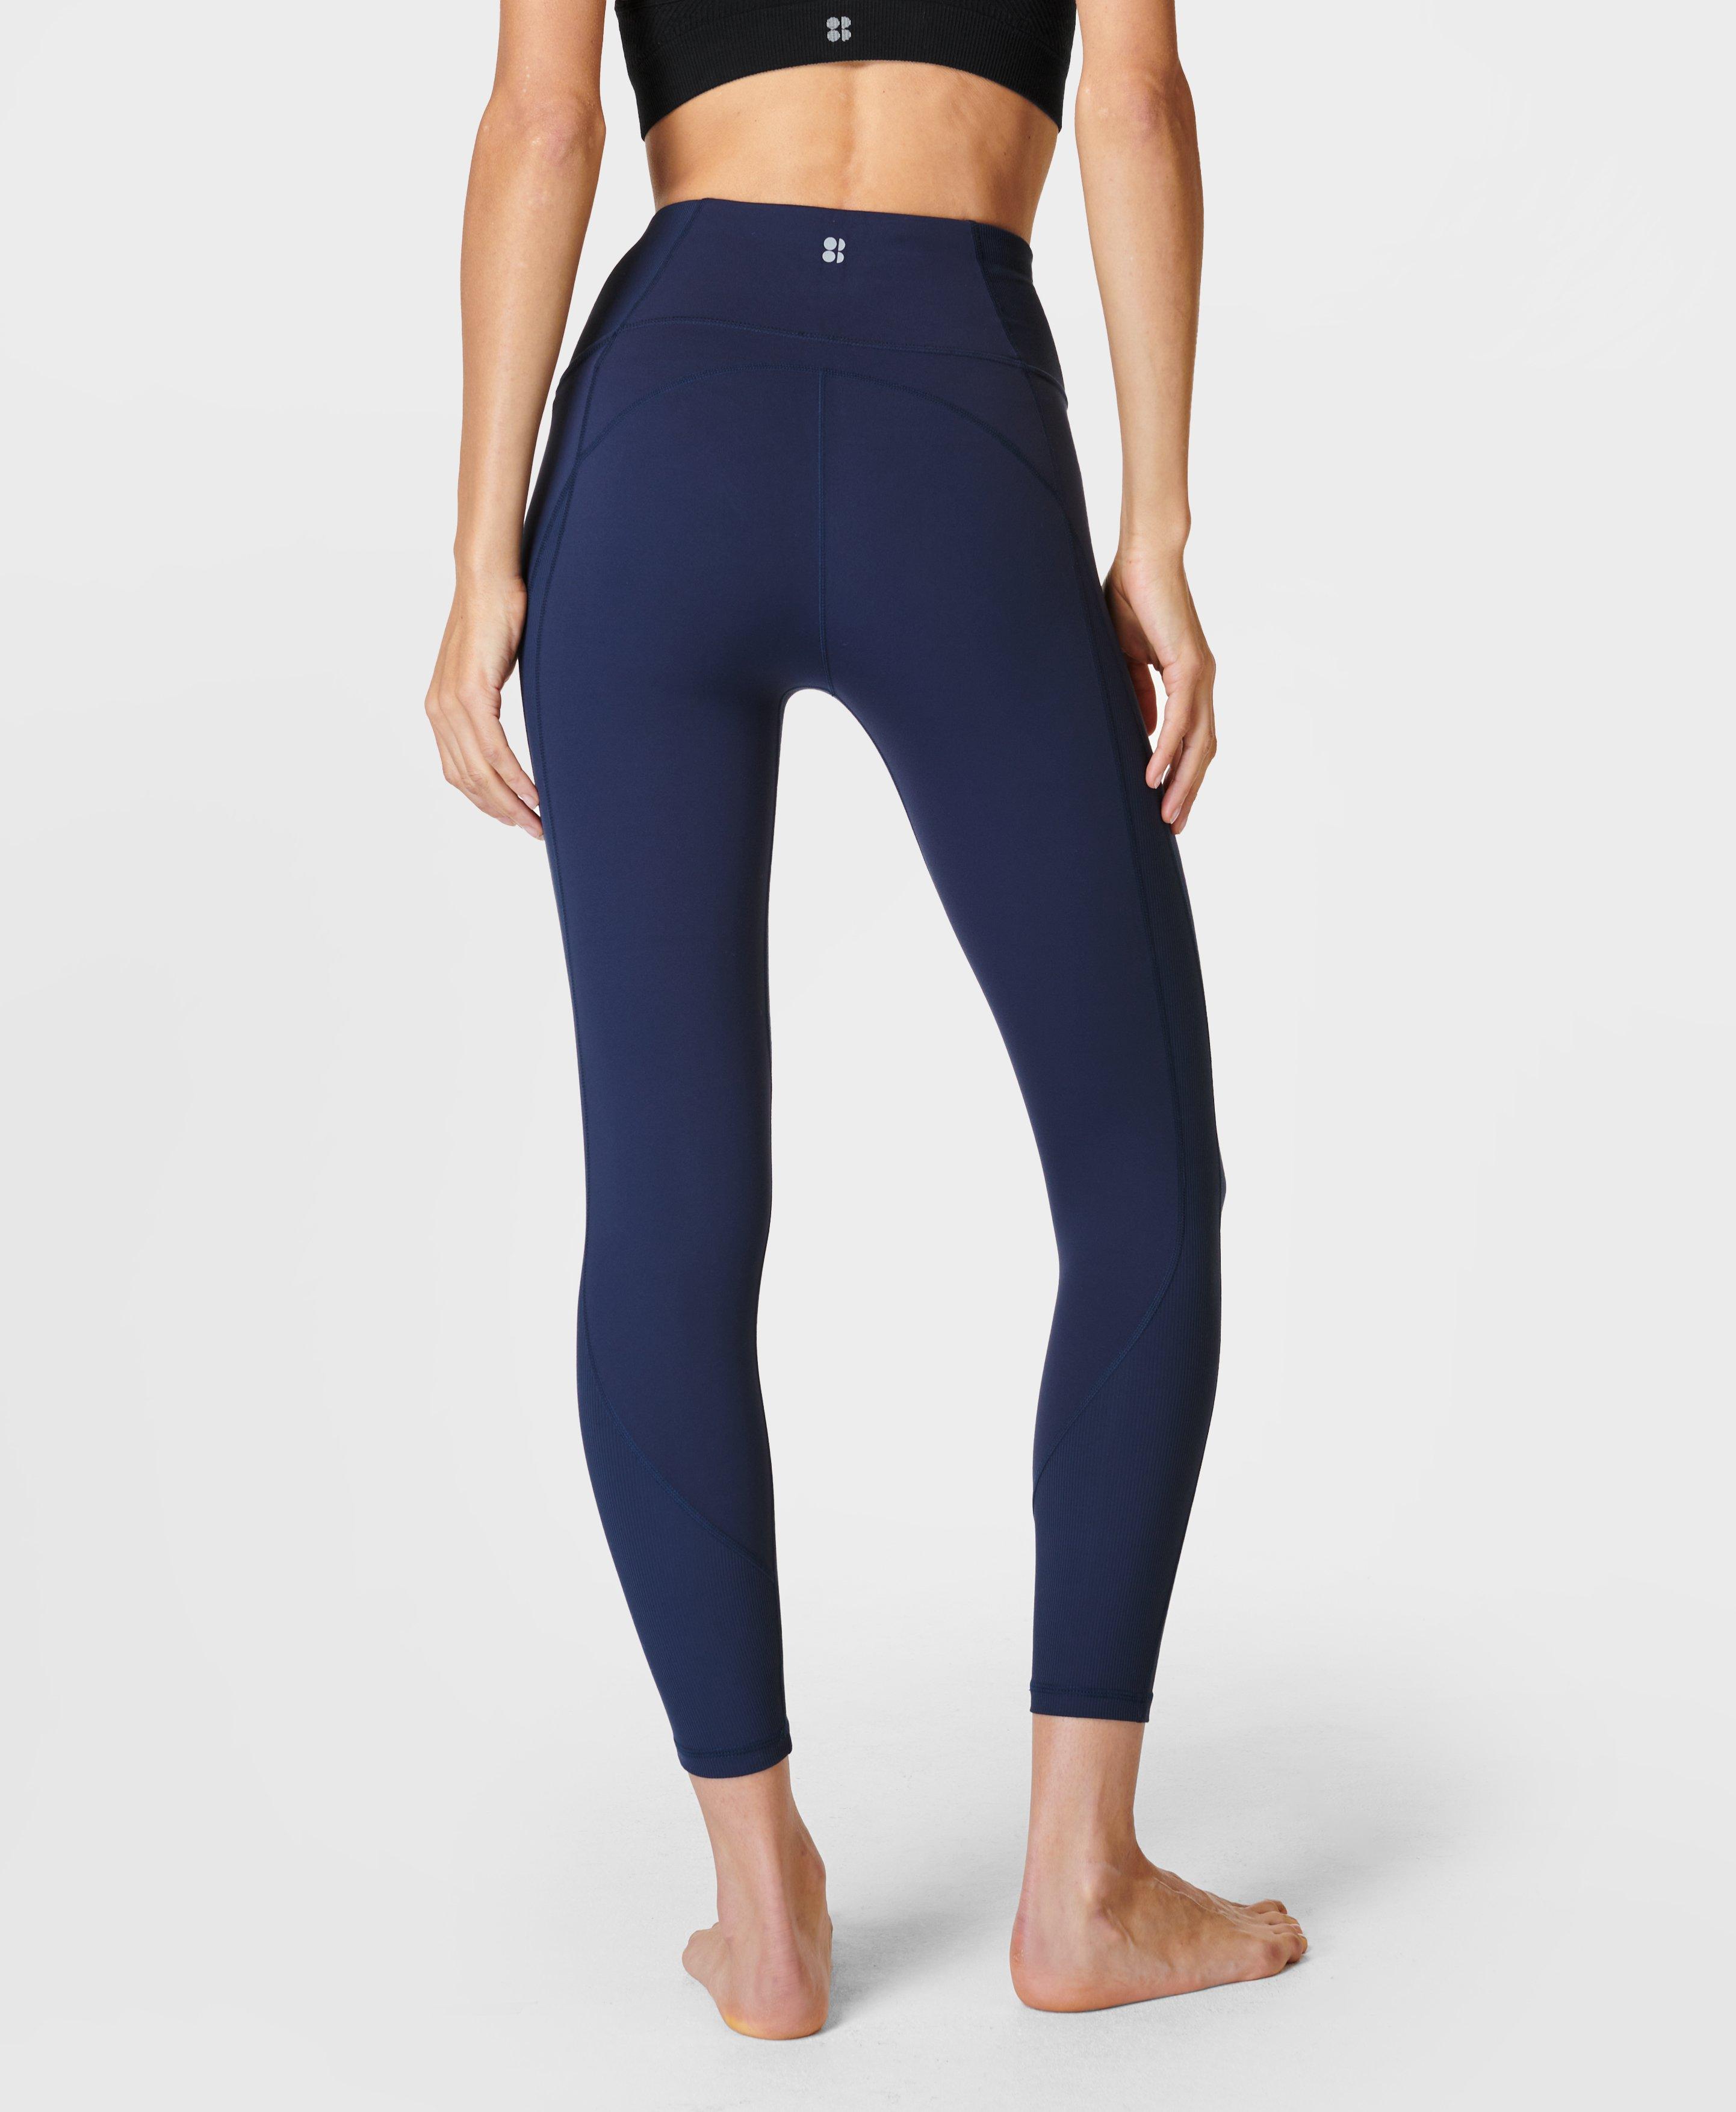 Lululemon Womens Blue Yoga Pants Size 8 Regular Good Used